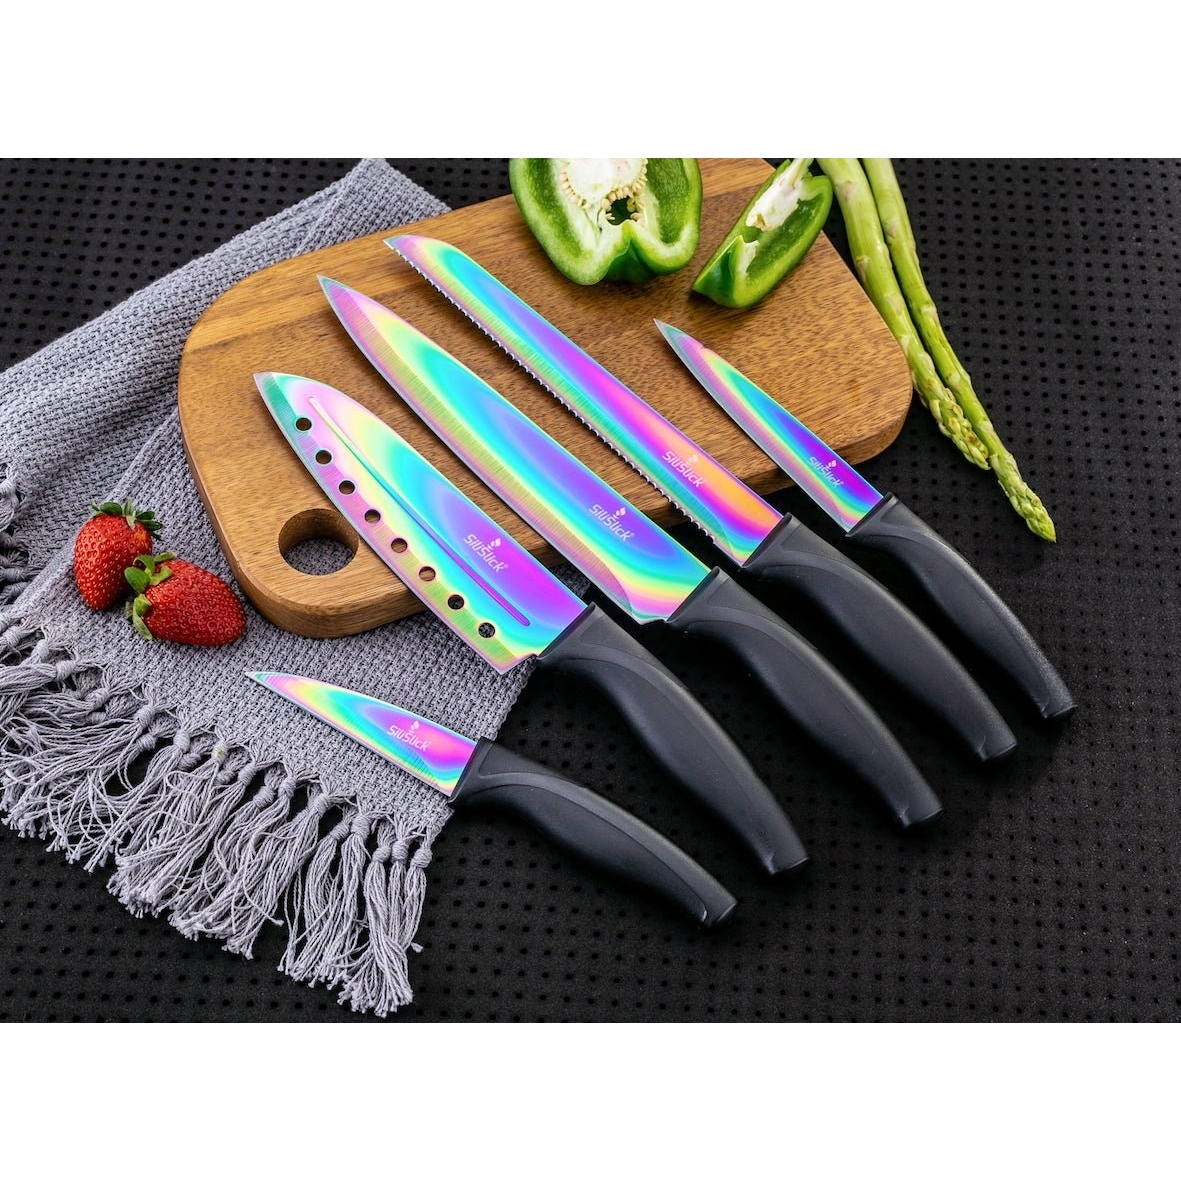 SiliSlick Stainless Steel Black Handle Knife Set - Titanium Coated Stainless Steel Kitchen Utility Knife, Santoku, Bread, Chef, & Paring